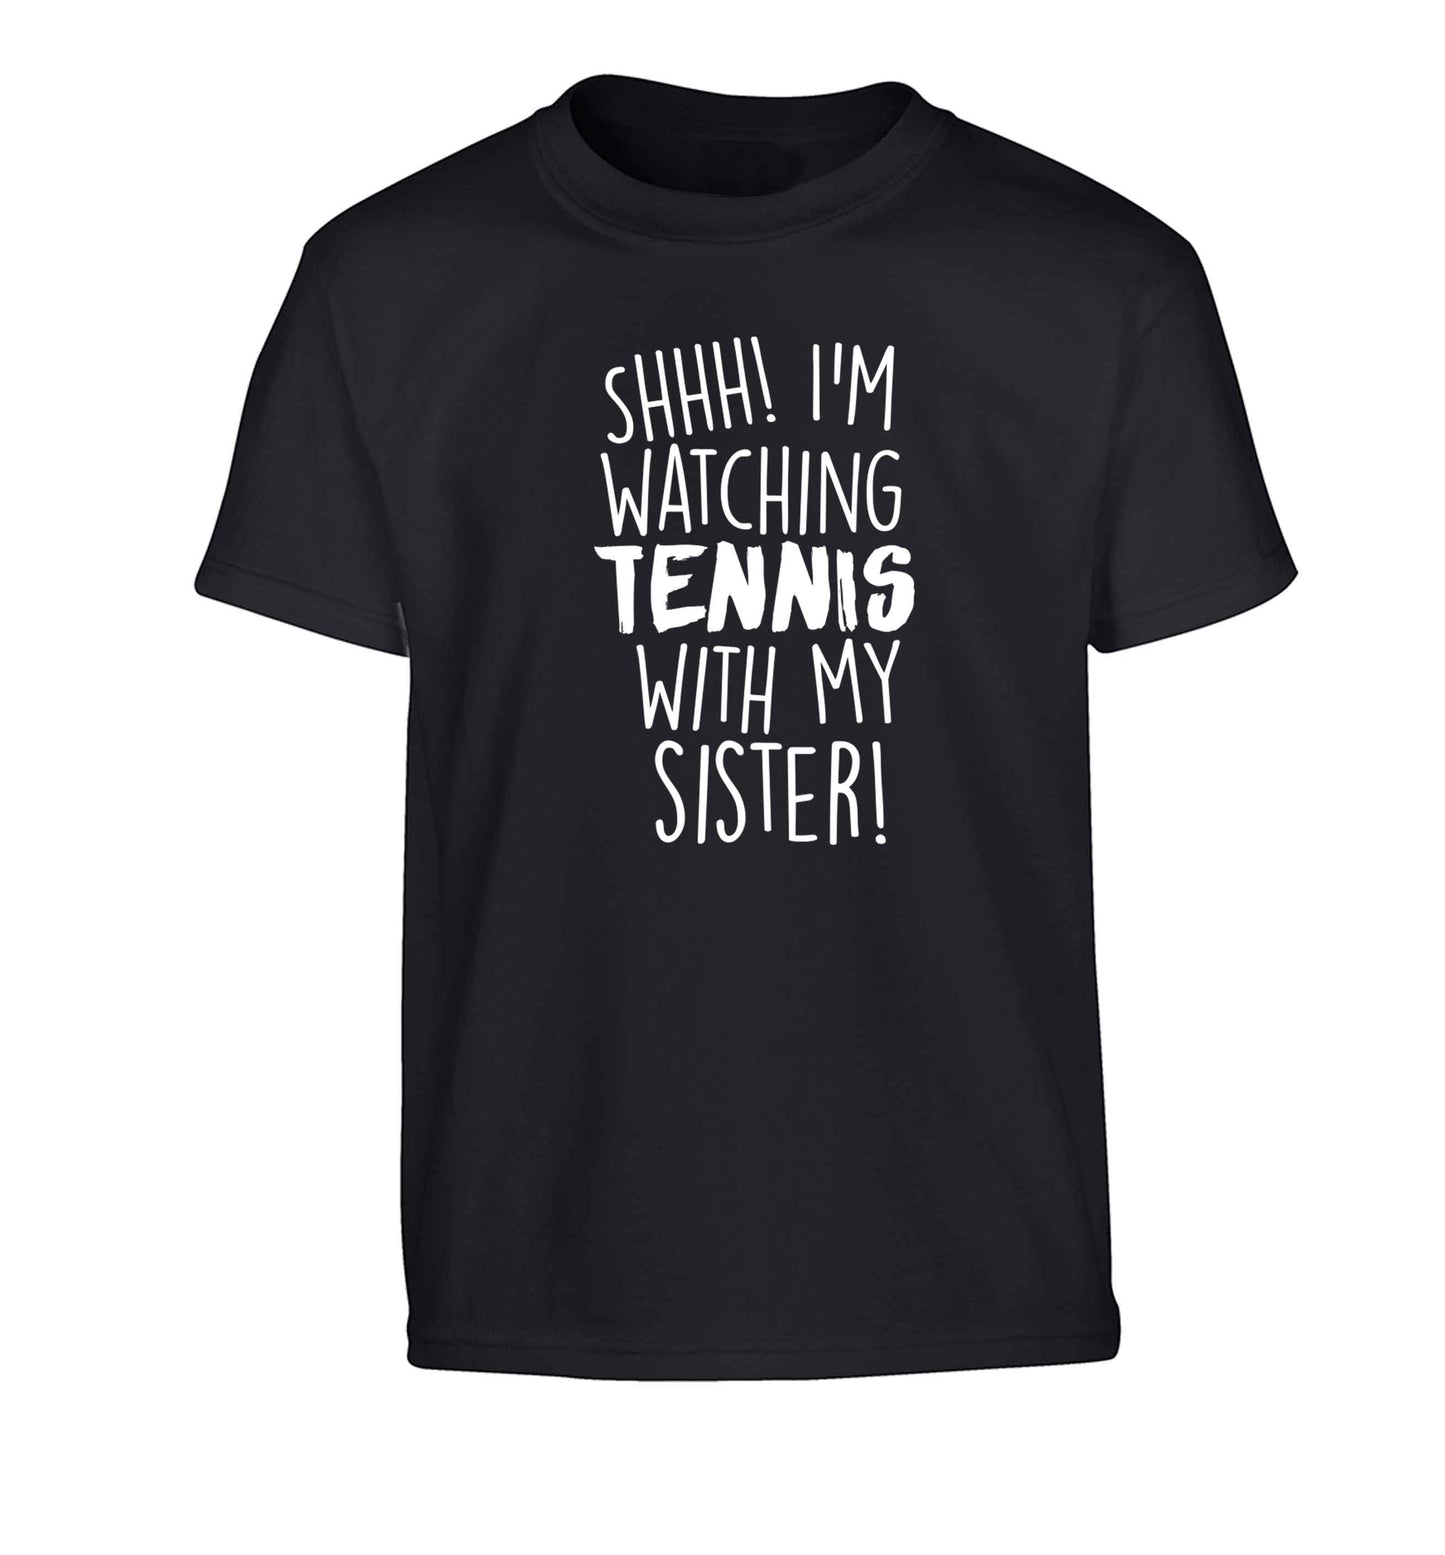 Shh! I'm watching tennis with my sister! Children's black Tshirt 12-13 Years